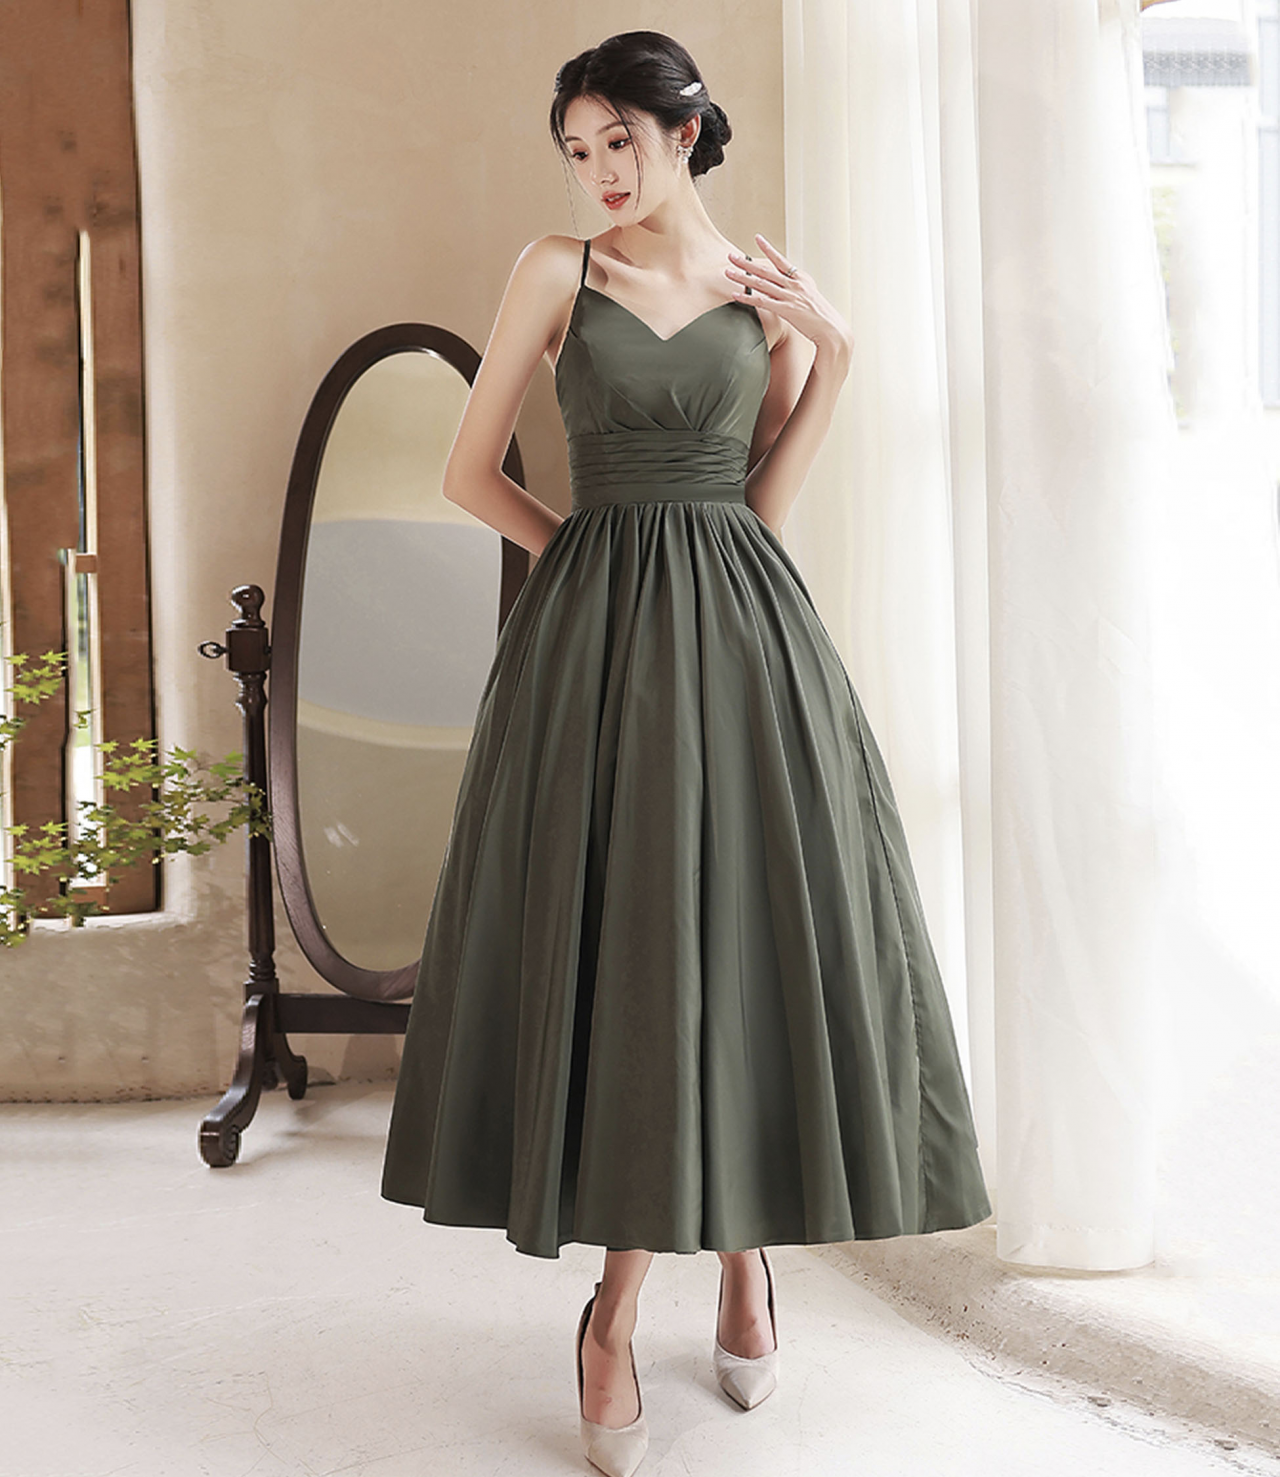 Green V-neck Satin Short Prom Dress Homecoming Dress